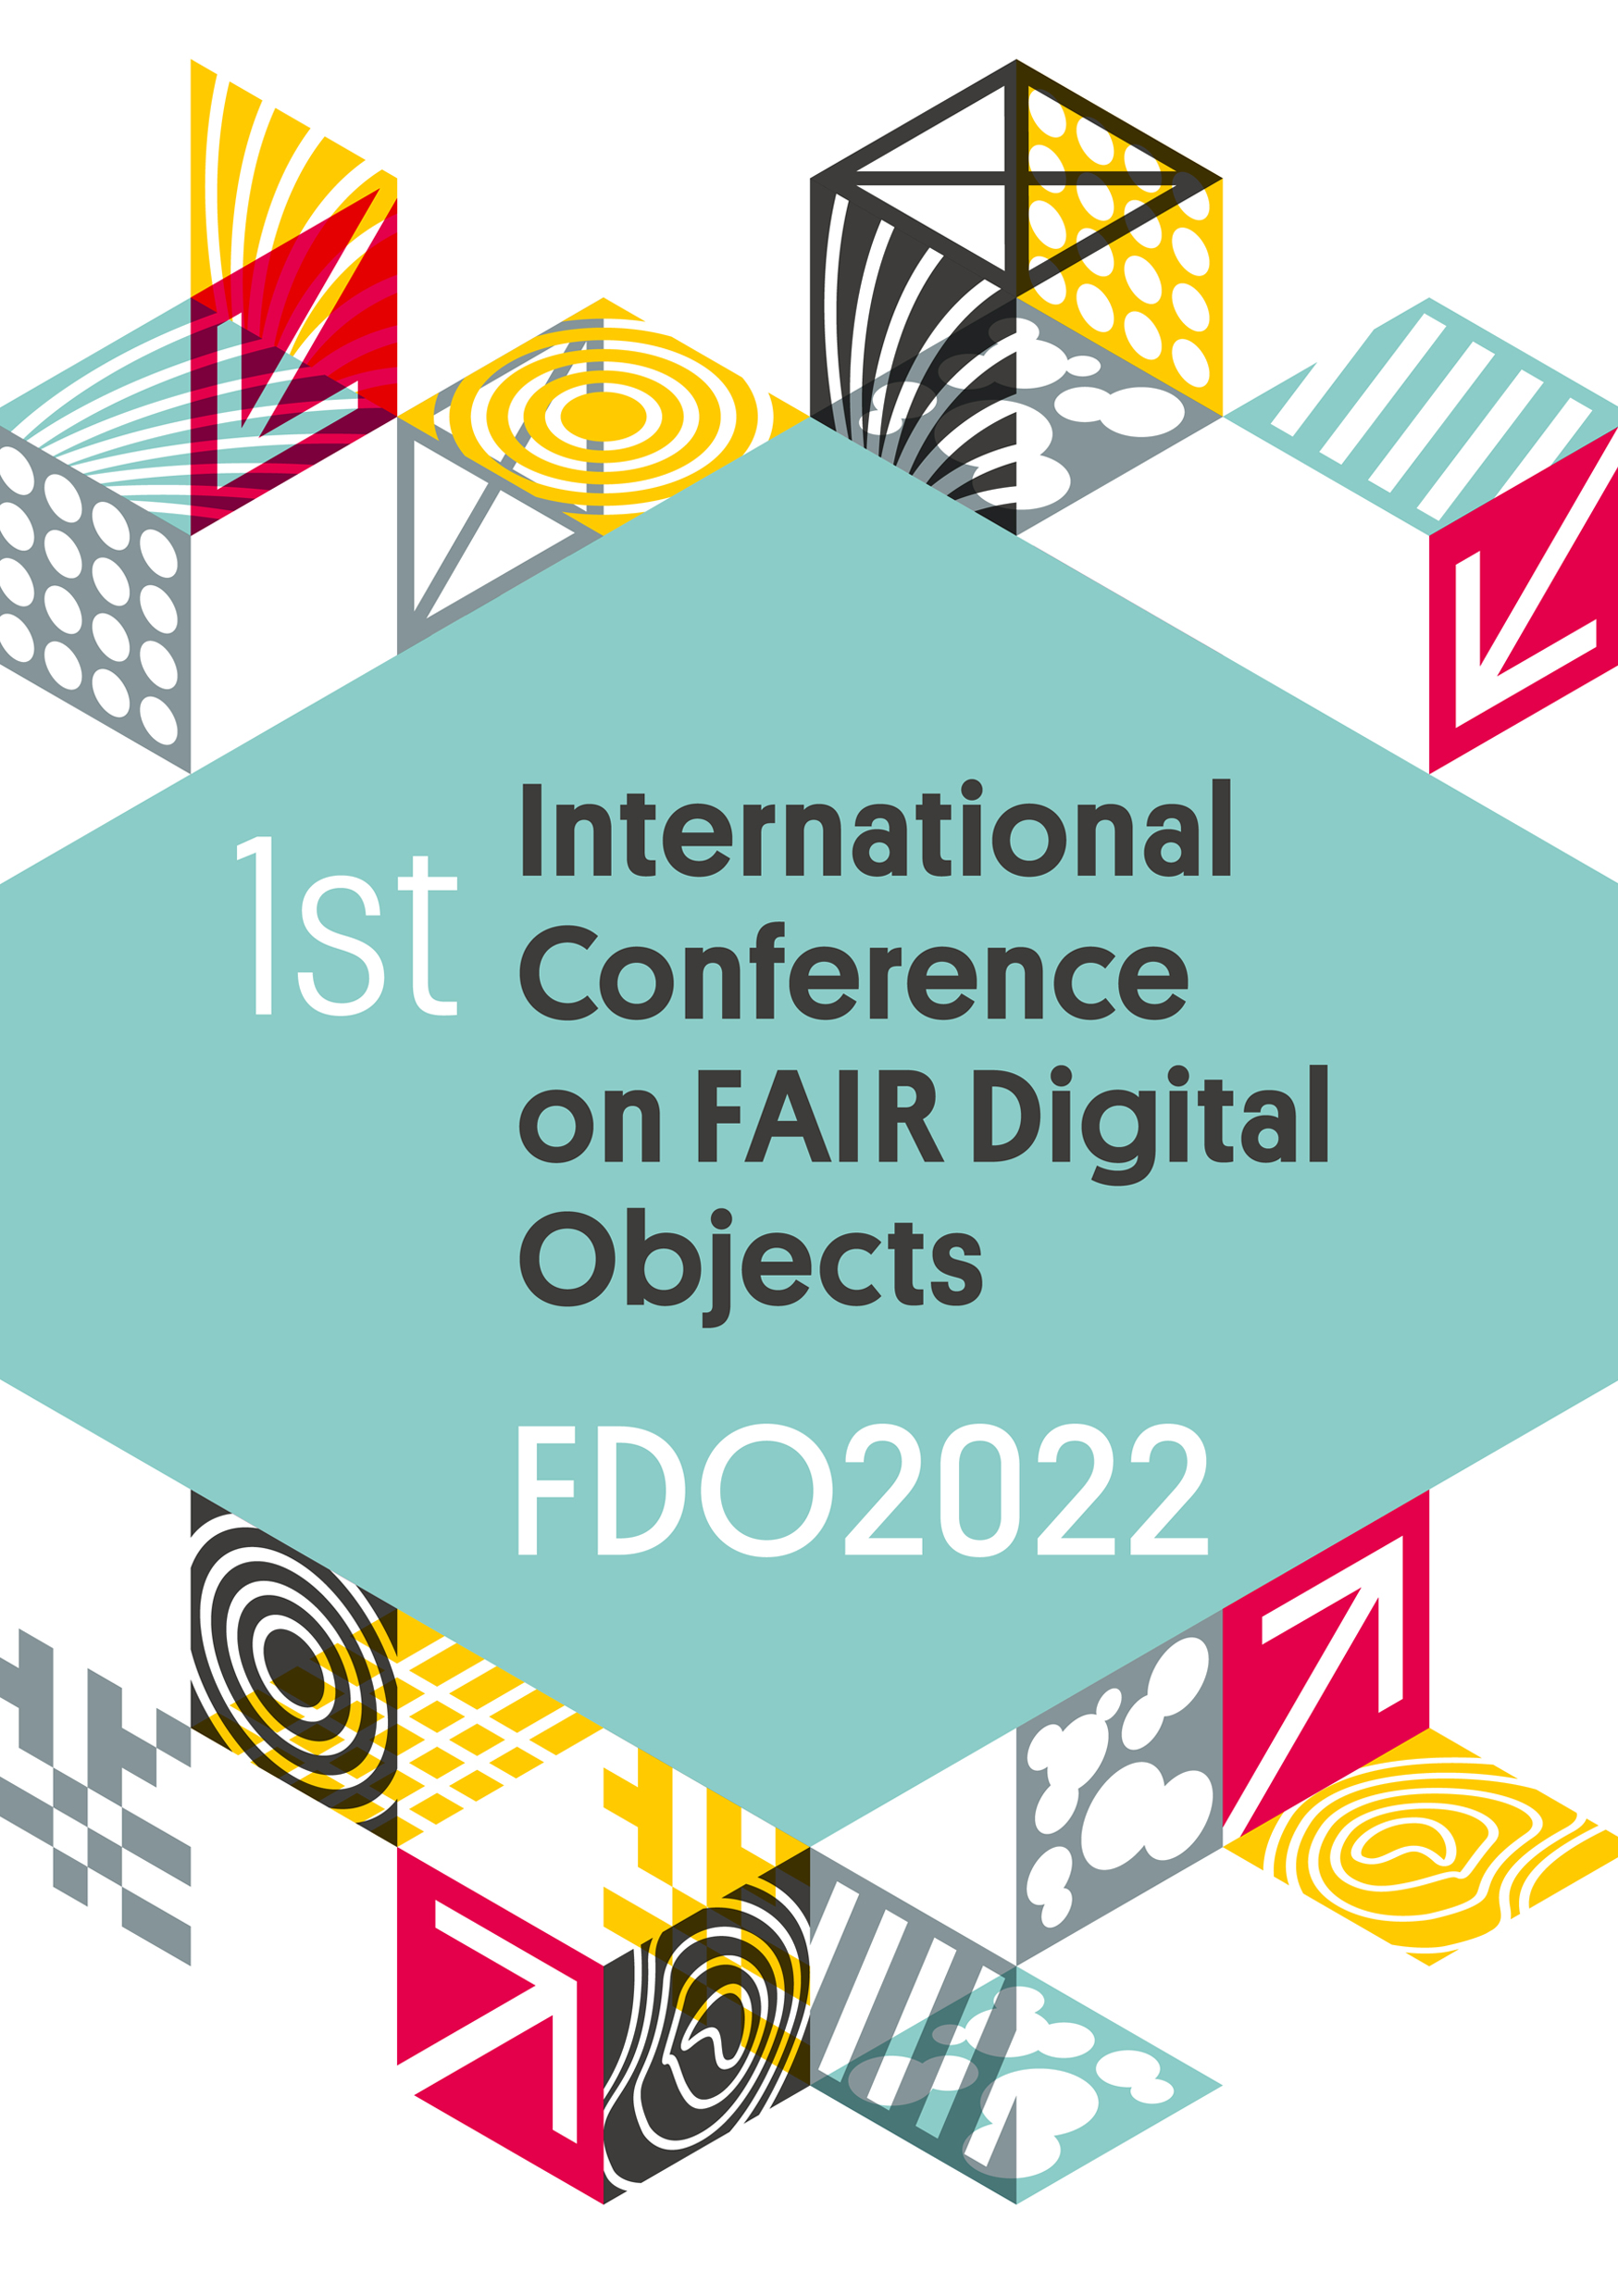 Fair Digital Objects Forum Graphic